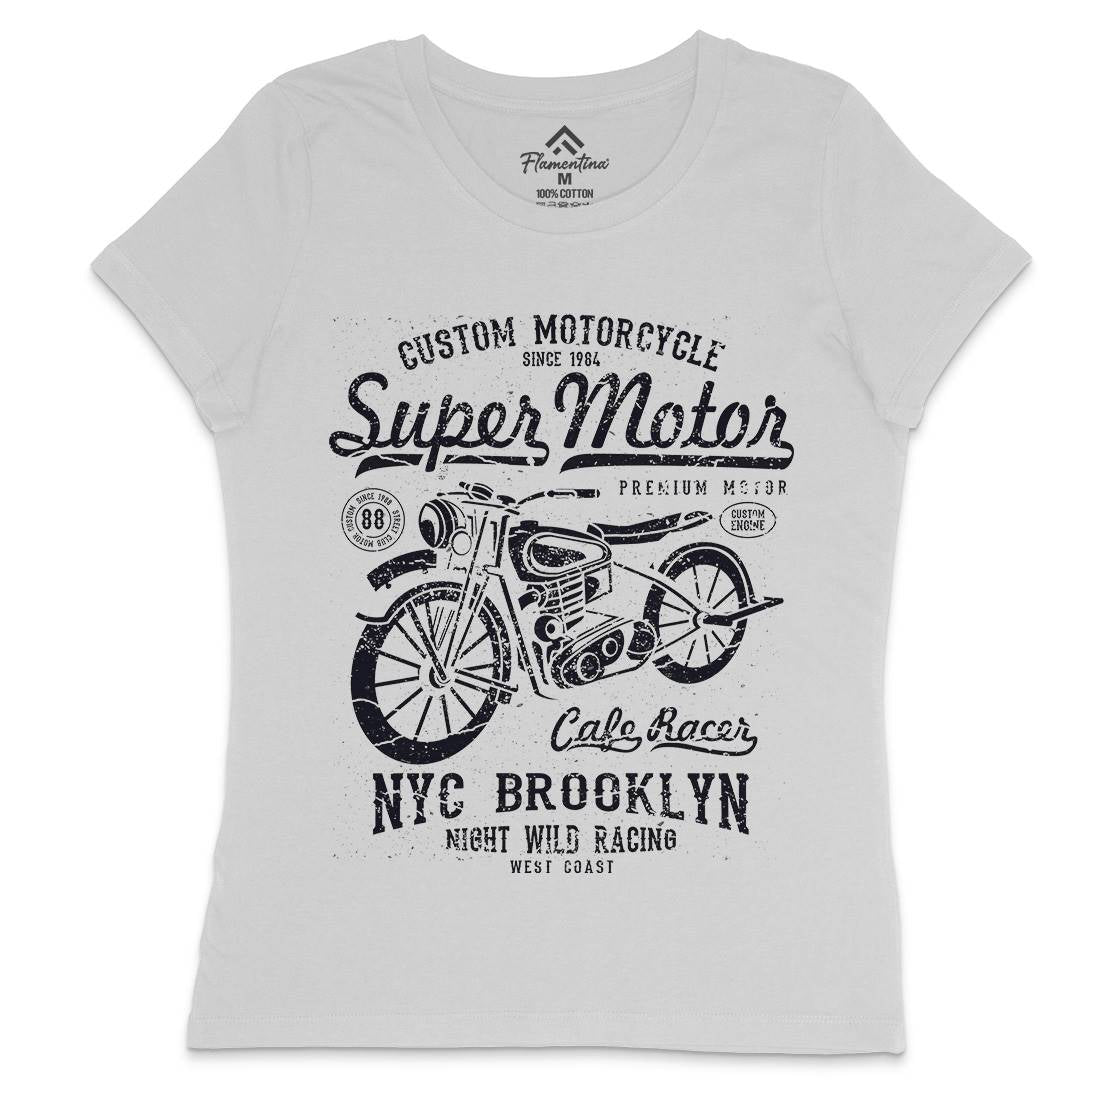 Super Motor Womens Crew Neck T-Shirt Motorcycles A166